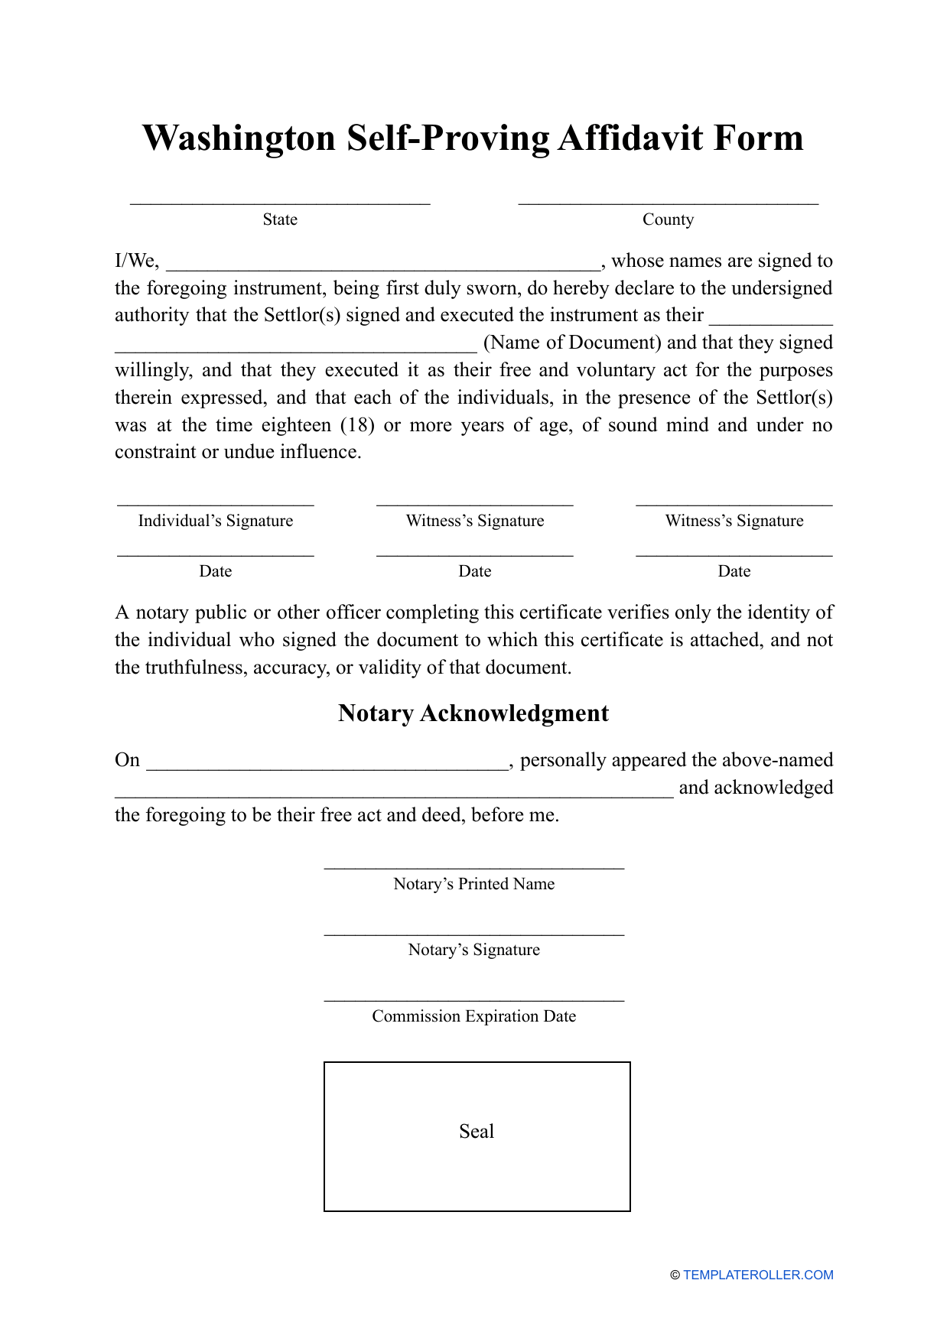 Self-proving Affidavit Form - Washington, Page 1